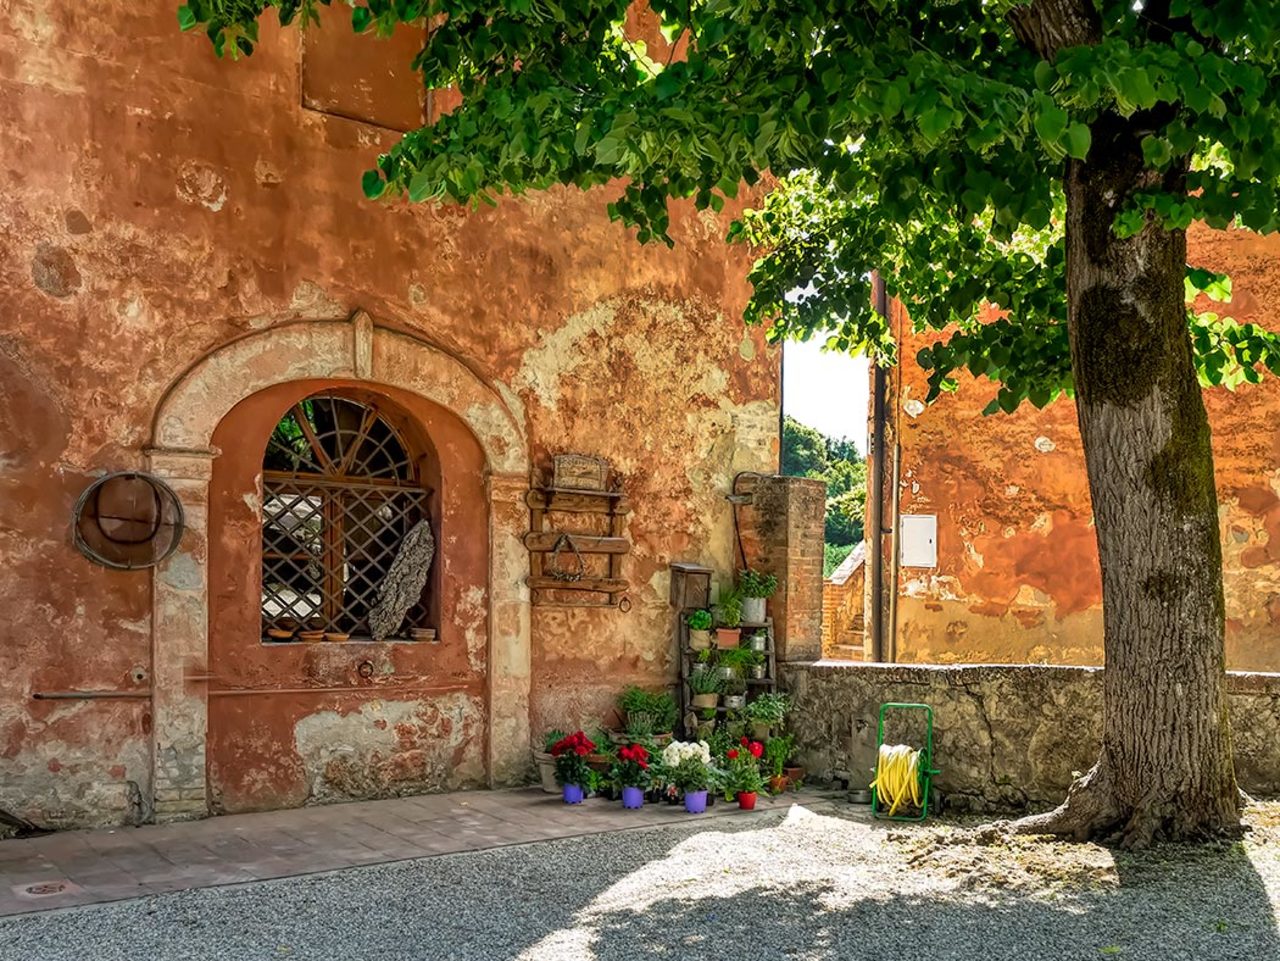 Palace at @Montestigliano  Luxury Holiday Farm in #Tuscany, #Italy http://ow.ly/gG1730czx7k #ExperienceItalia https://t.co/o8kaFYRMc7